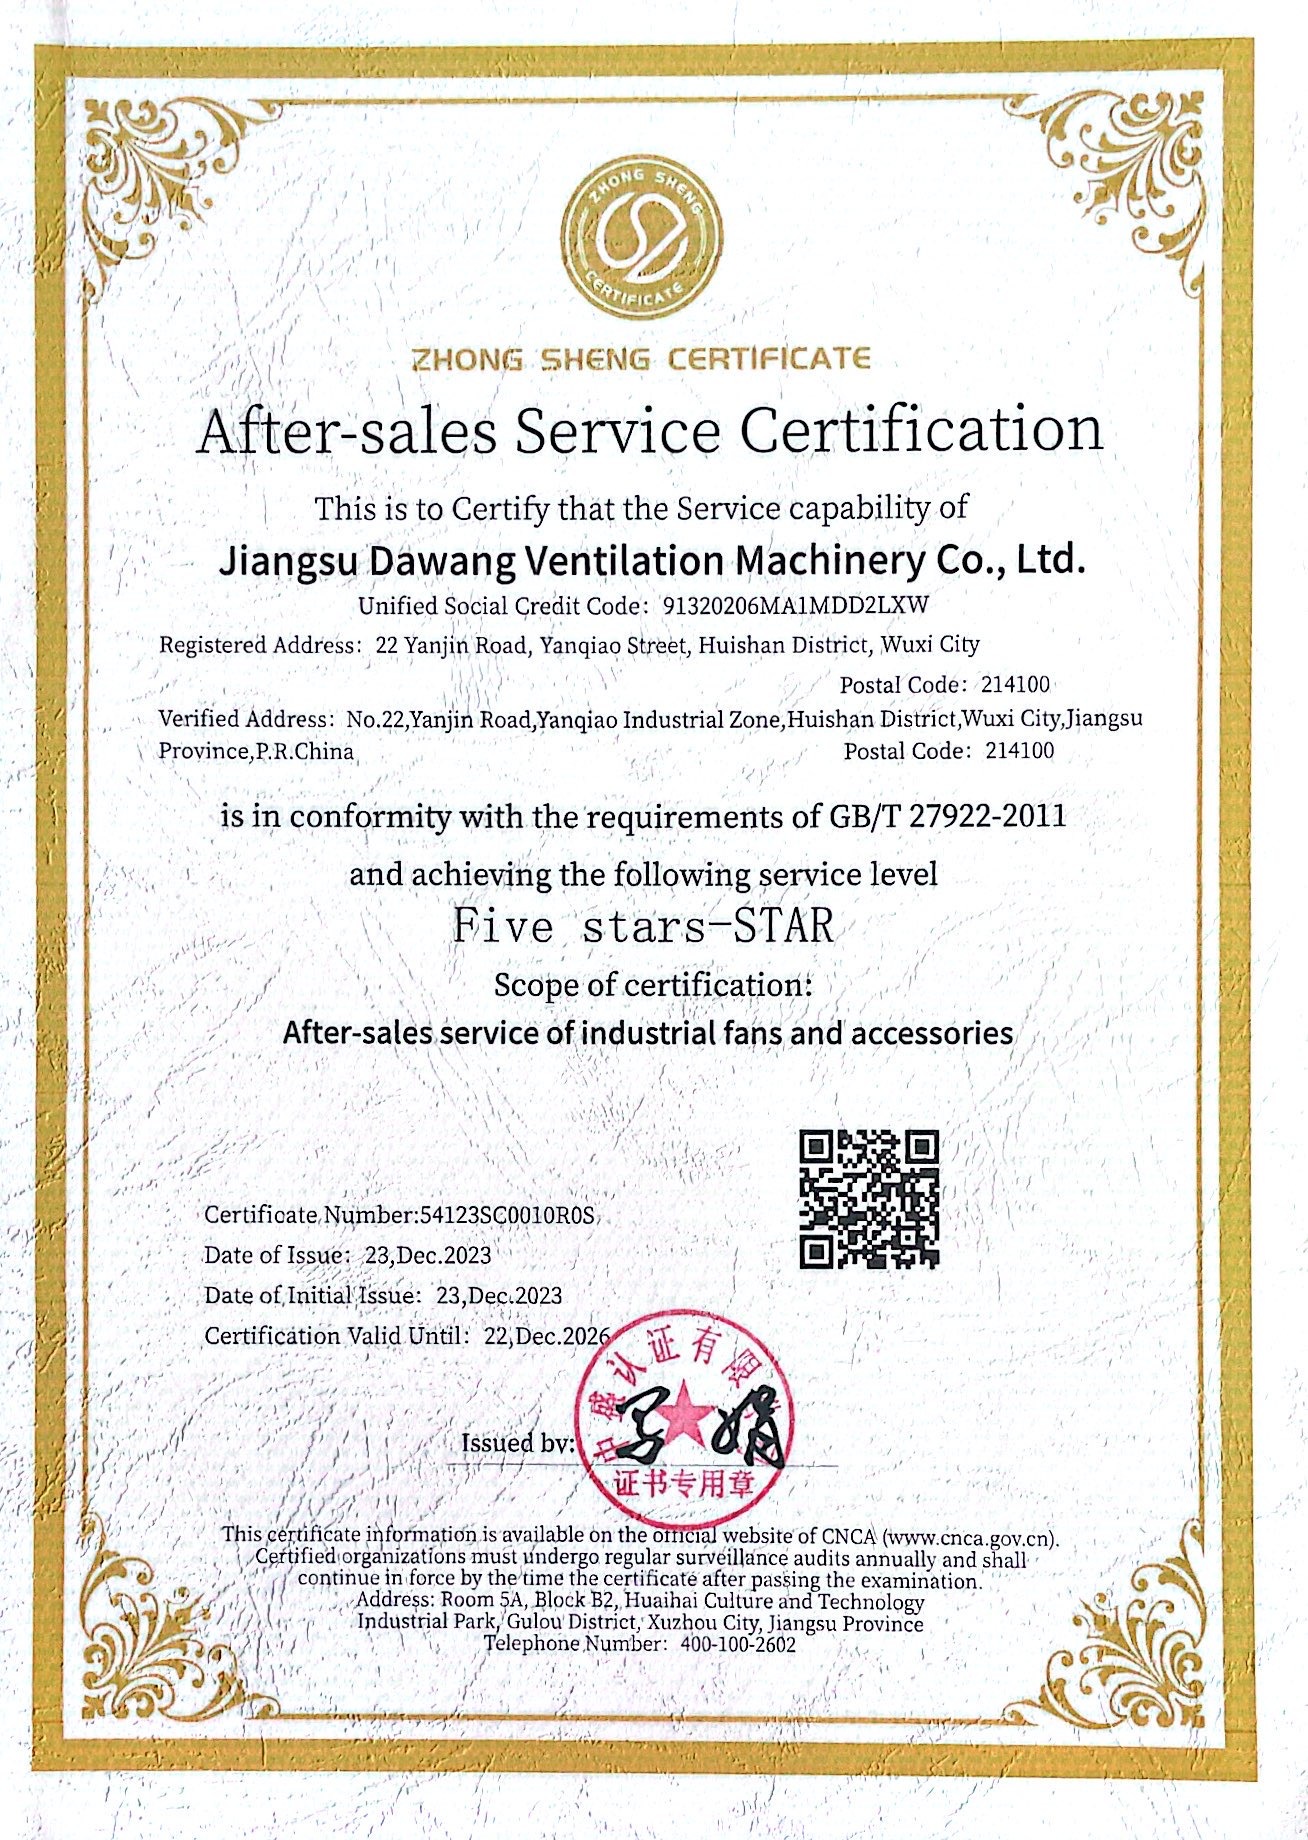 After-sales Service Certification